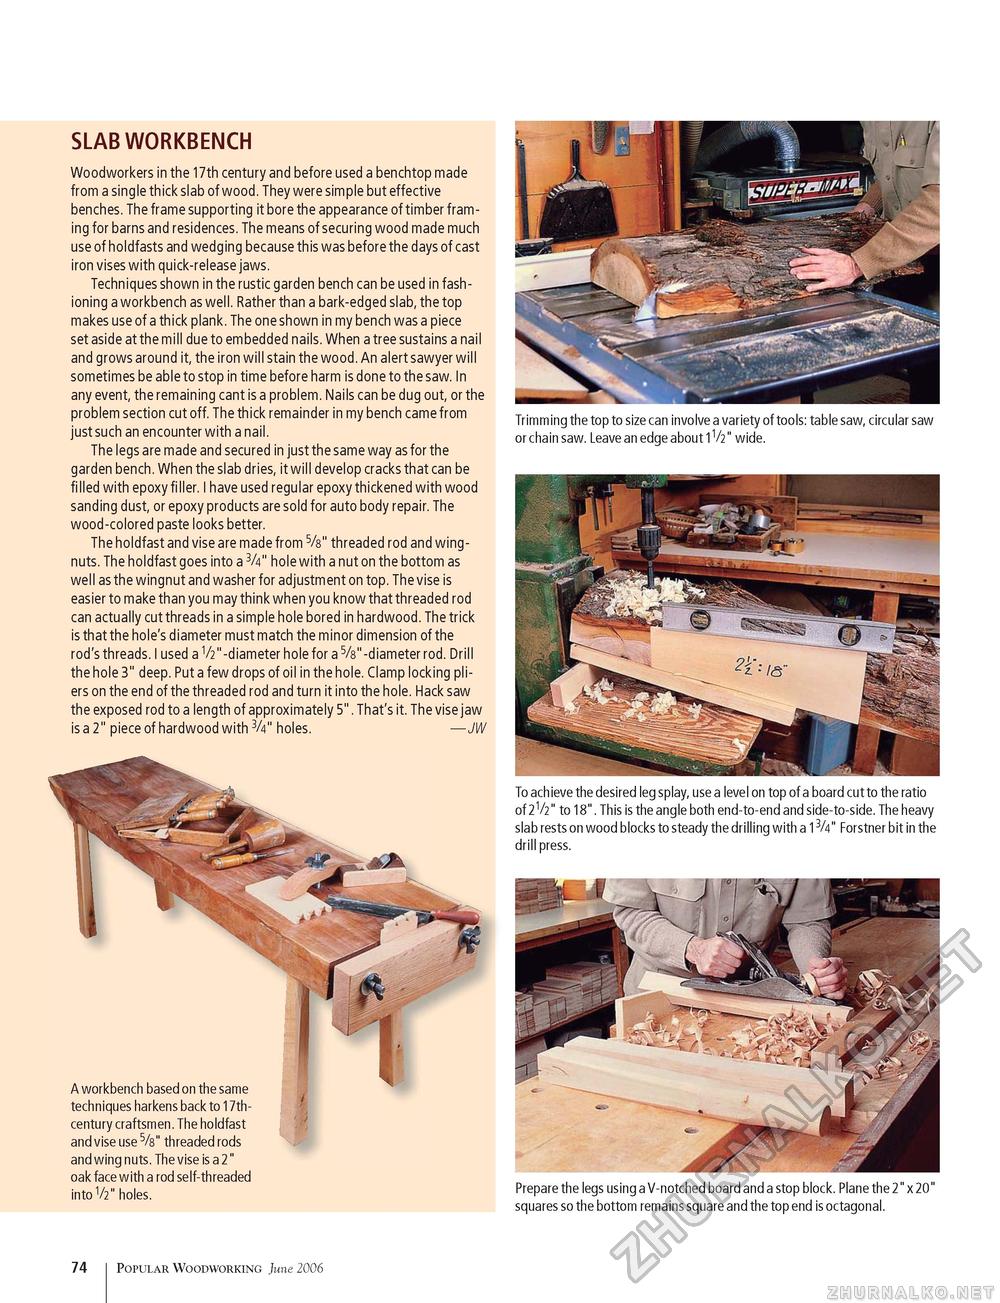 Popular Woodworking 2006-06  155,  76